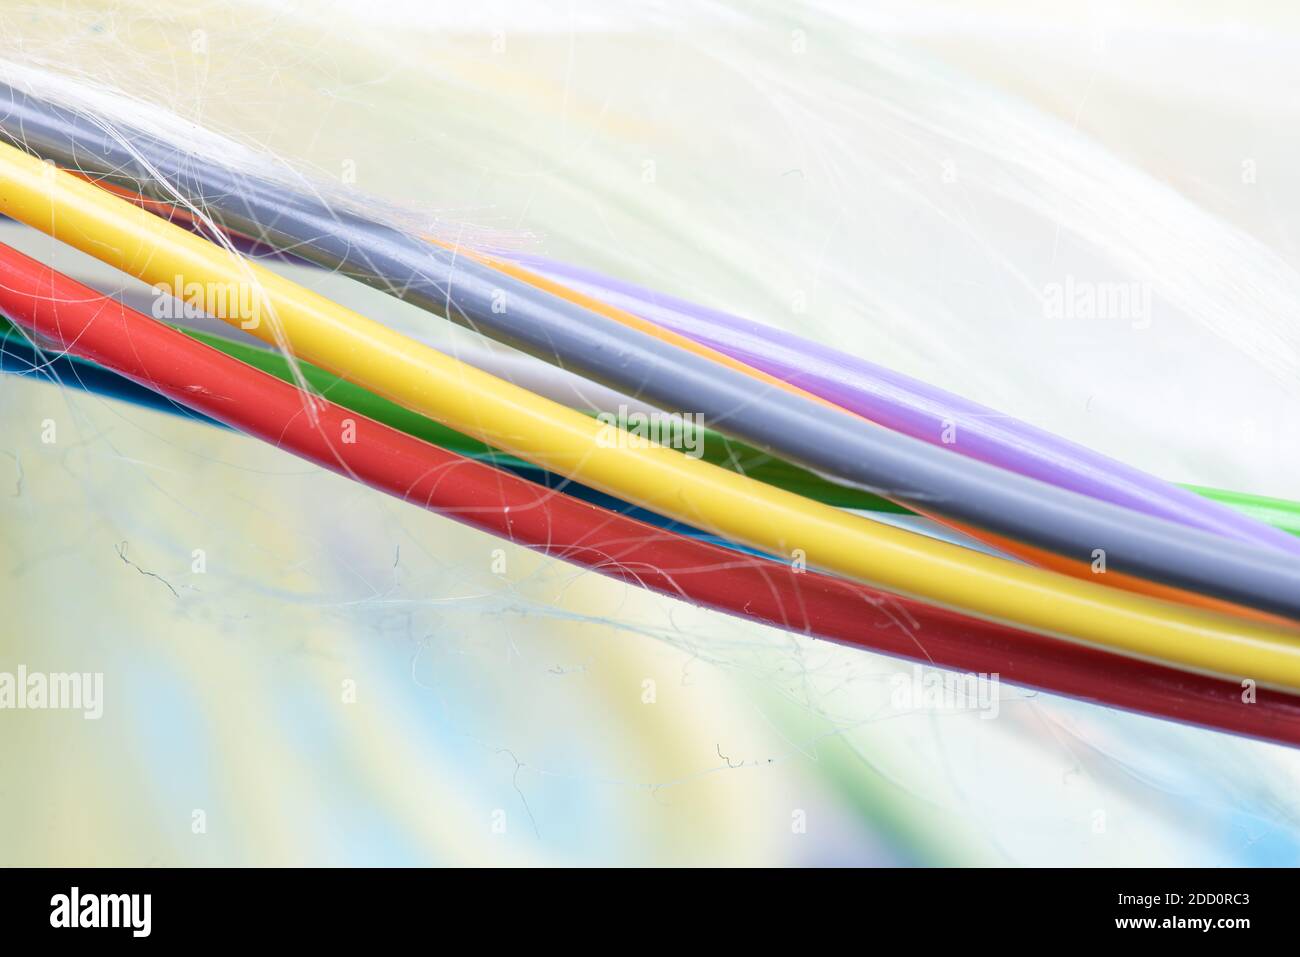 Tubo de cable de fibra óptica fotografías e imágenes de alta resolución -  Alamy